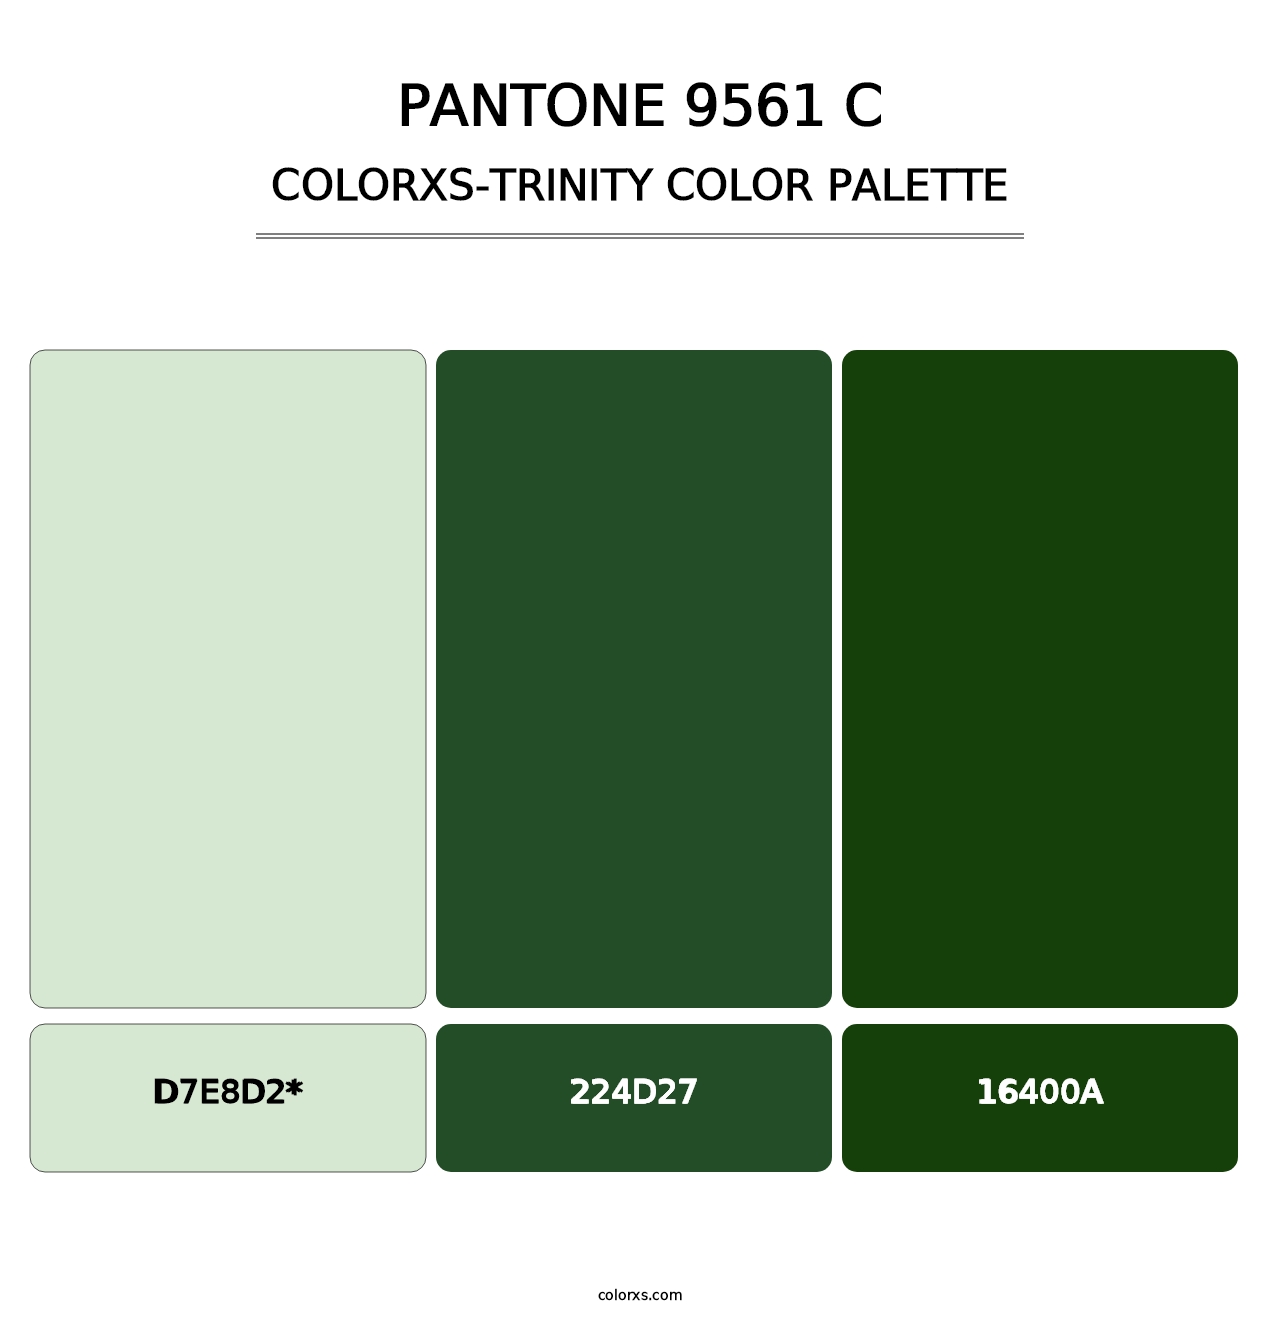 PANTONE 9561 C - Colorxs Trinity Palette